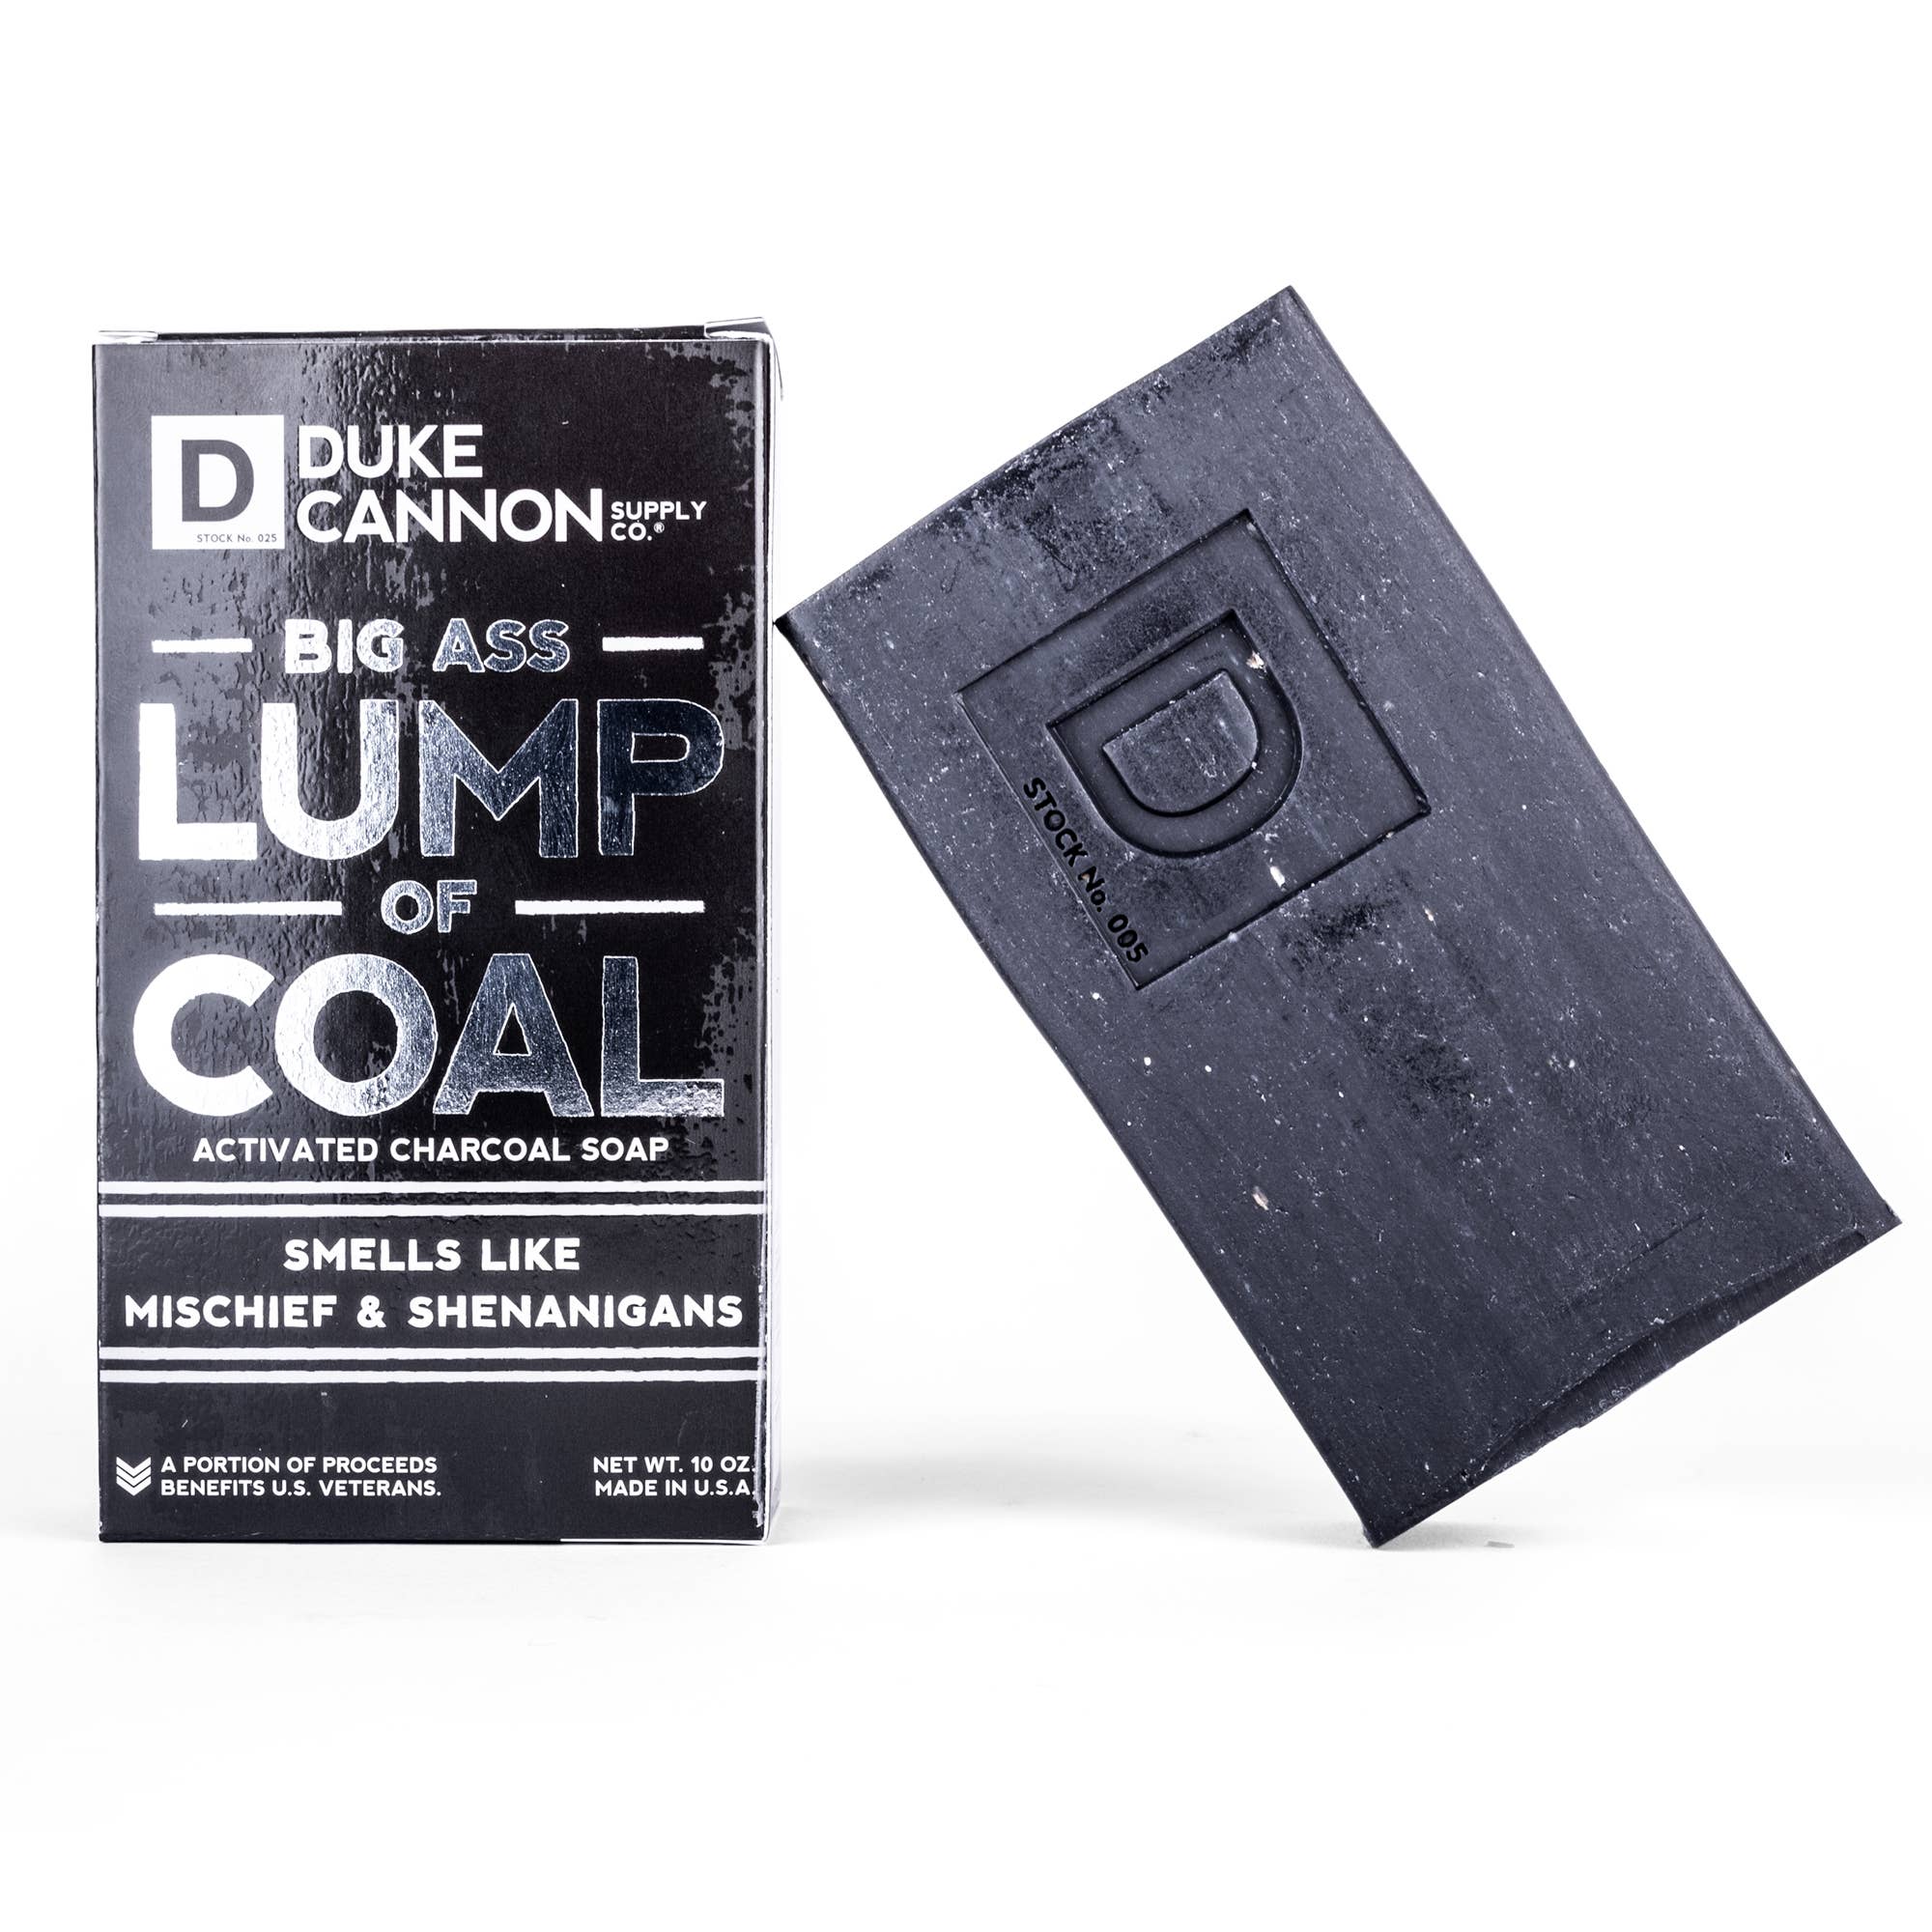 Duke Cannon Big Ass Lump of Coal soap